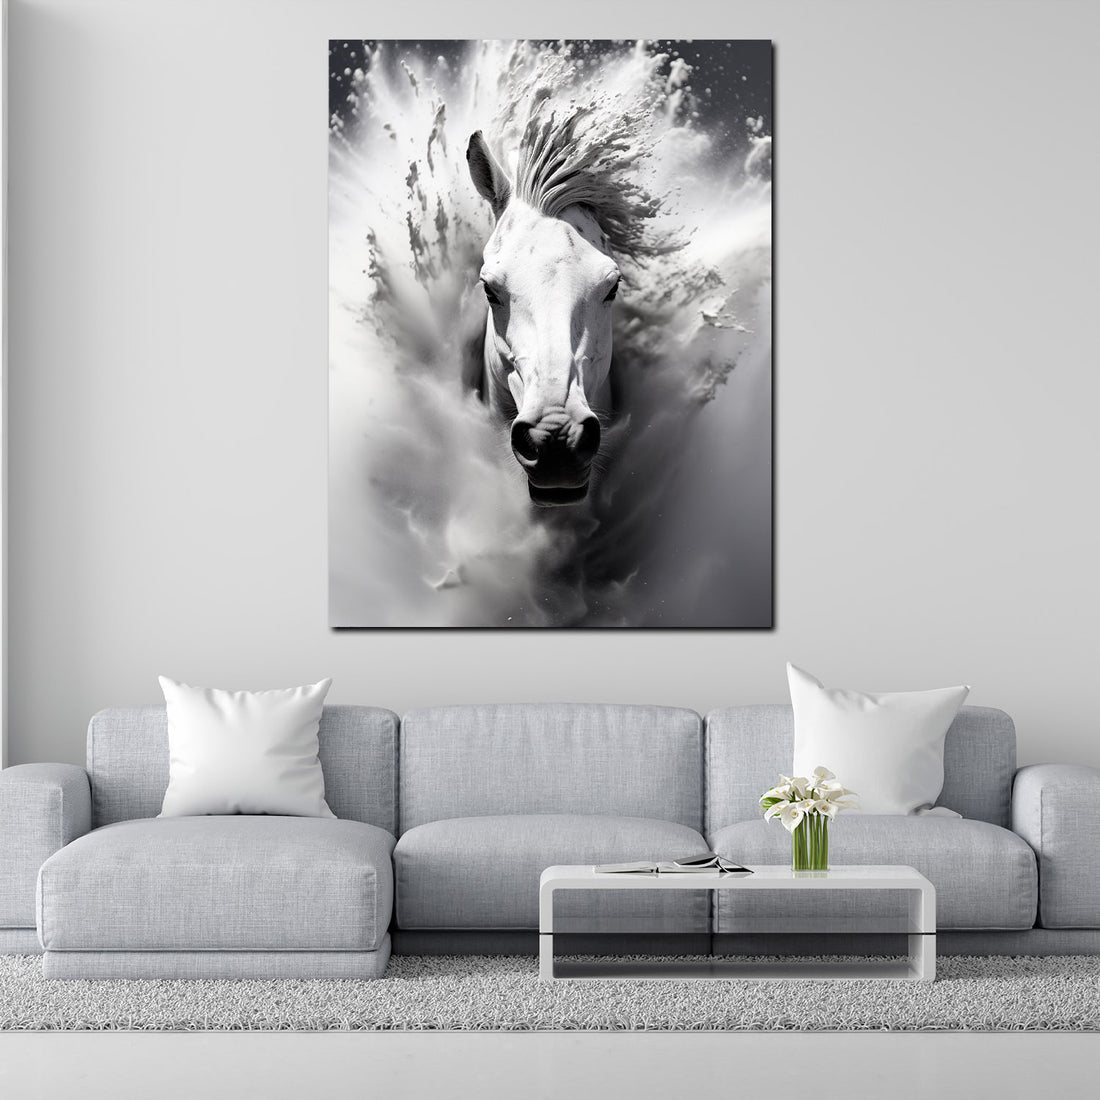 Wandbild abstrakt weißes Pferd frontal